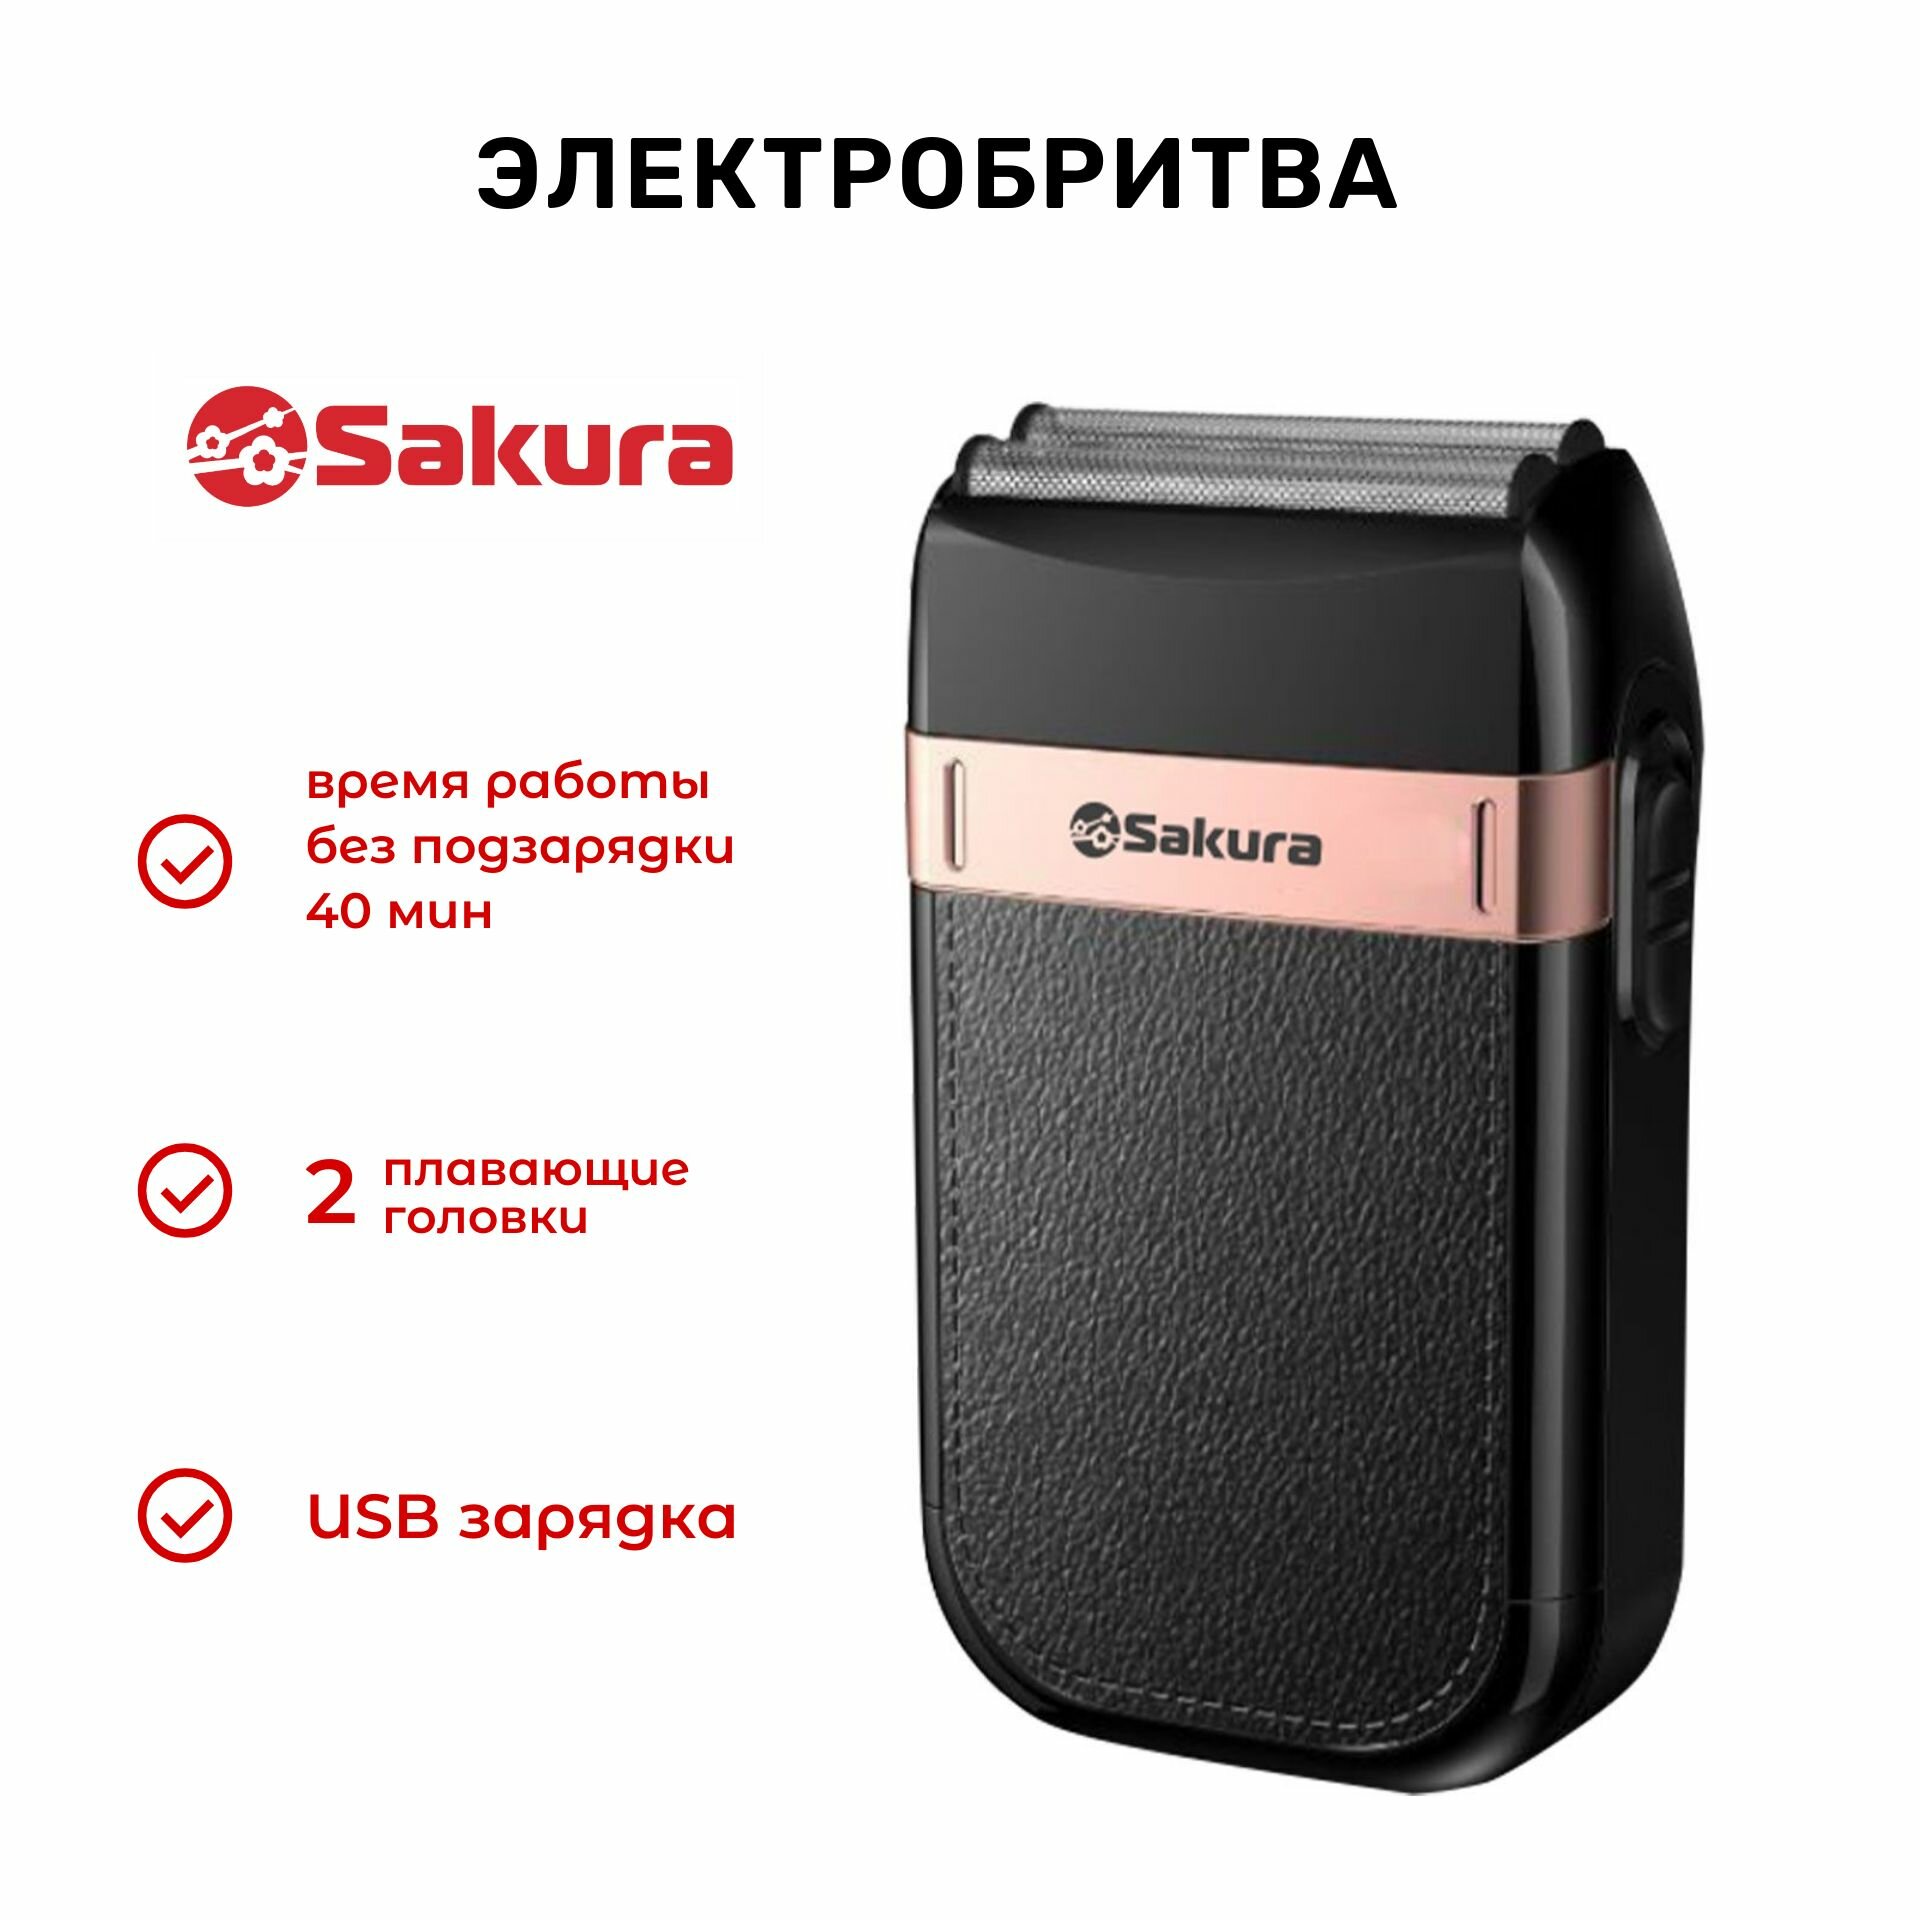 Электробритва Sakura для сухой стрижки, с зарядкой USB